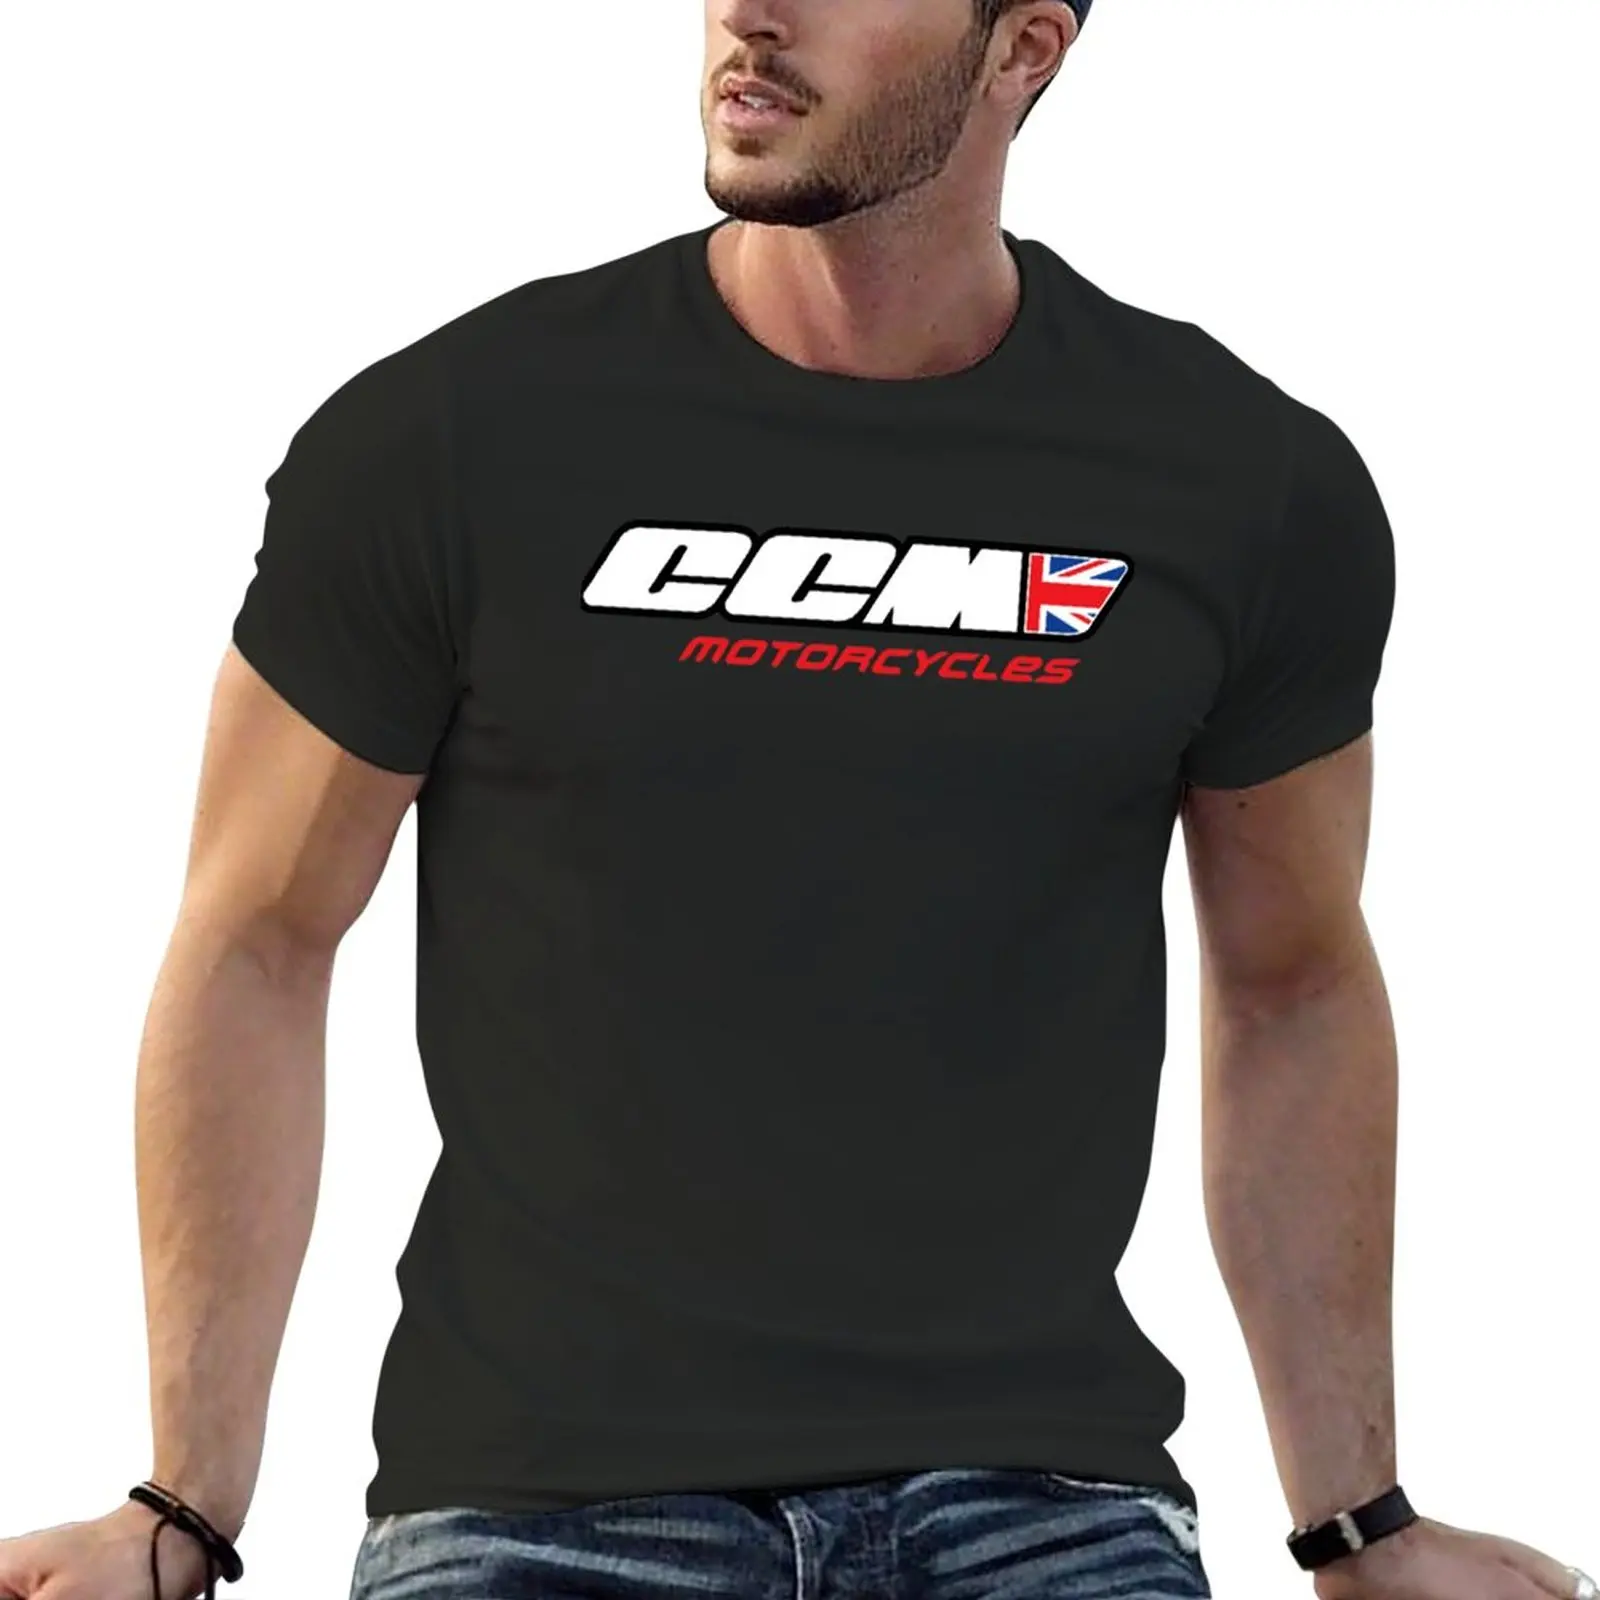 

New Ccm motorcycles british logo classic T-Shirt t shirt man cute tops summer clothes man clothes mens cotton t shirts